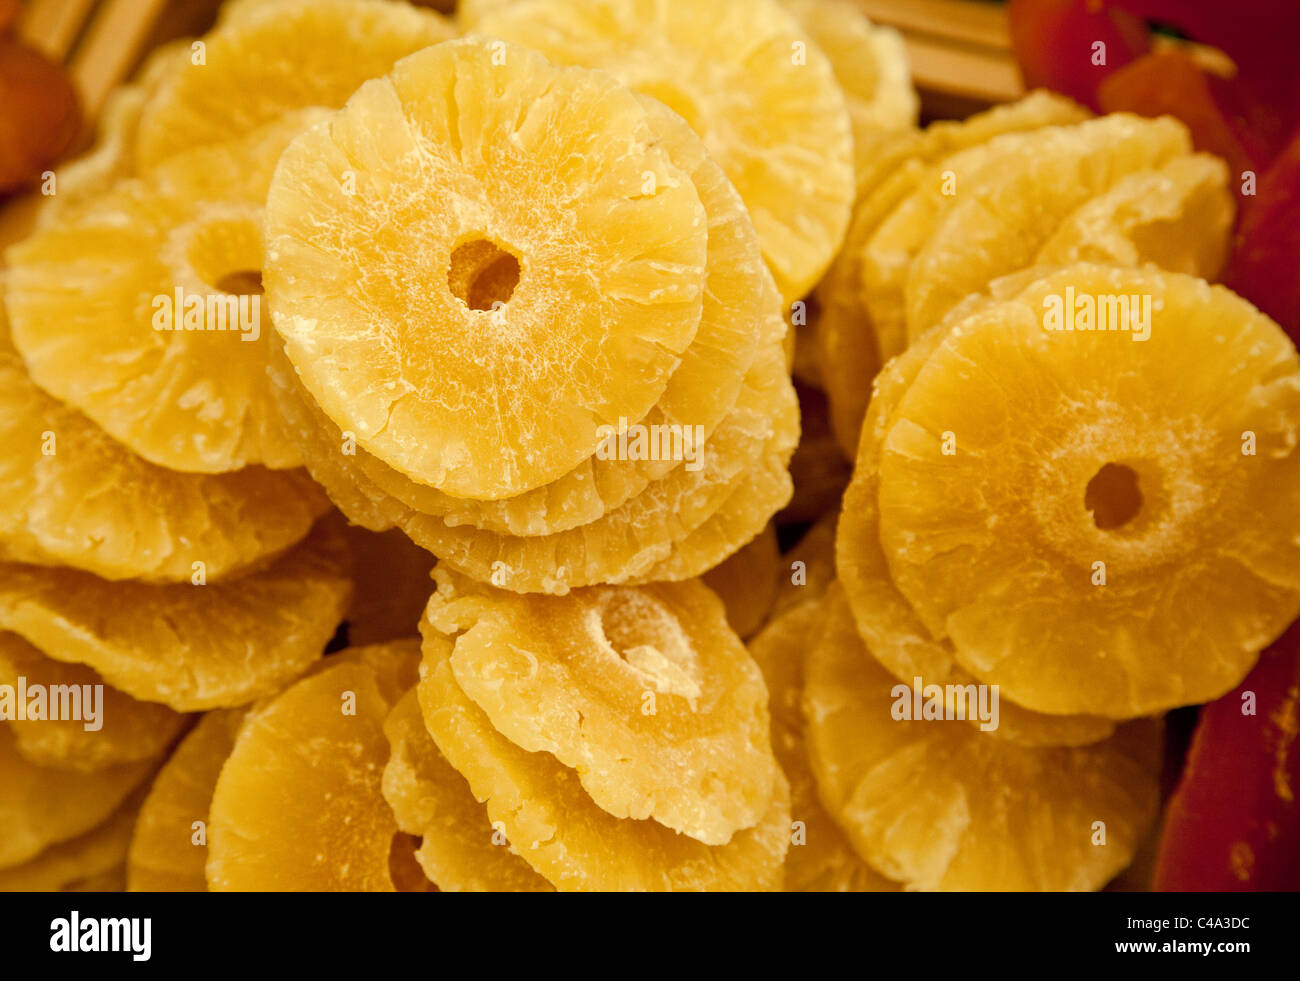 Sweet Ananas séché - Ananas, Ringe und schnittholz trockenfrüchte Banque D'Images